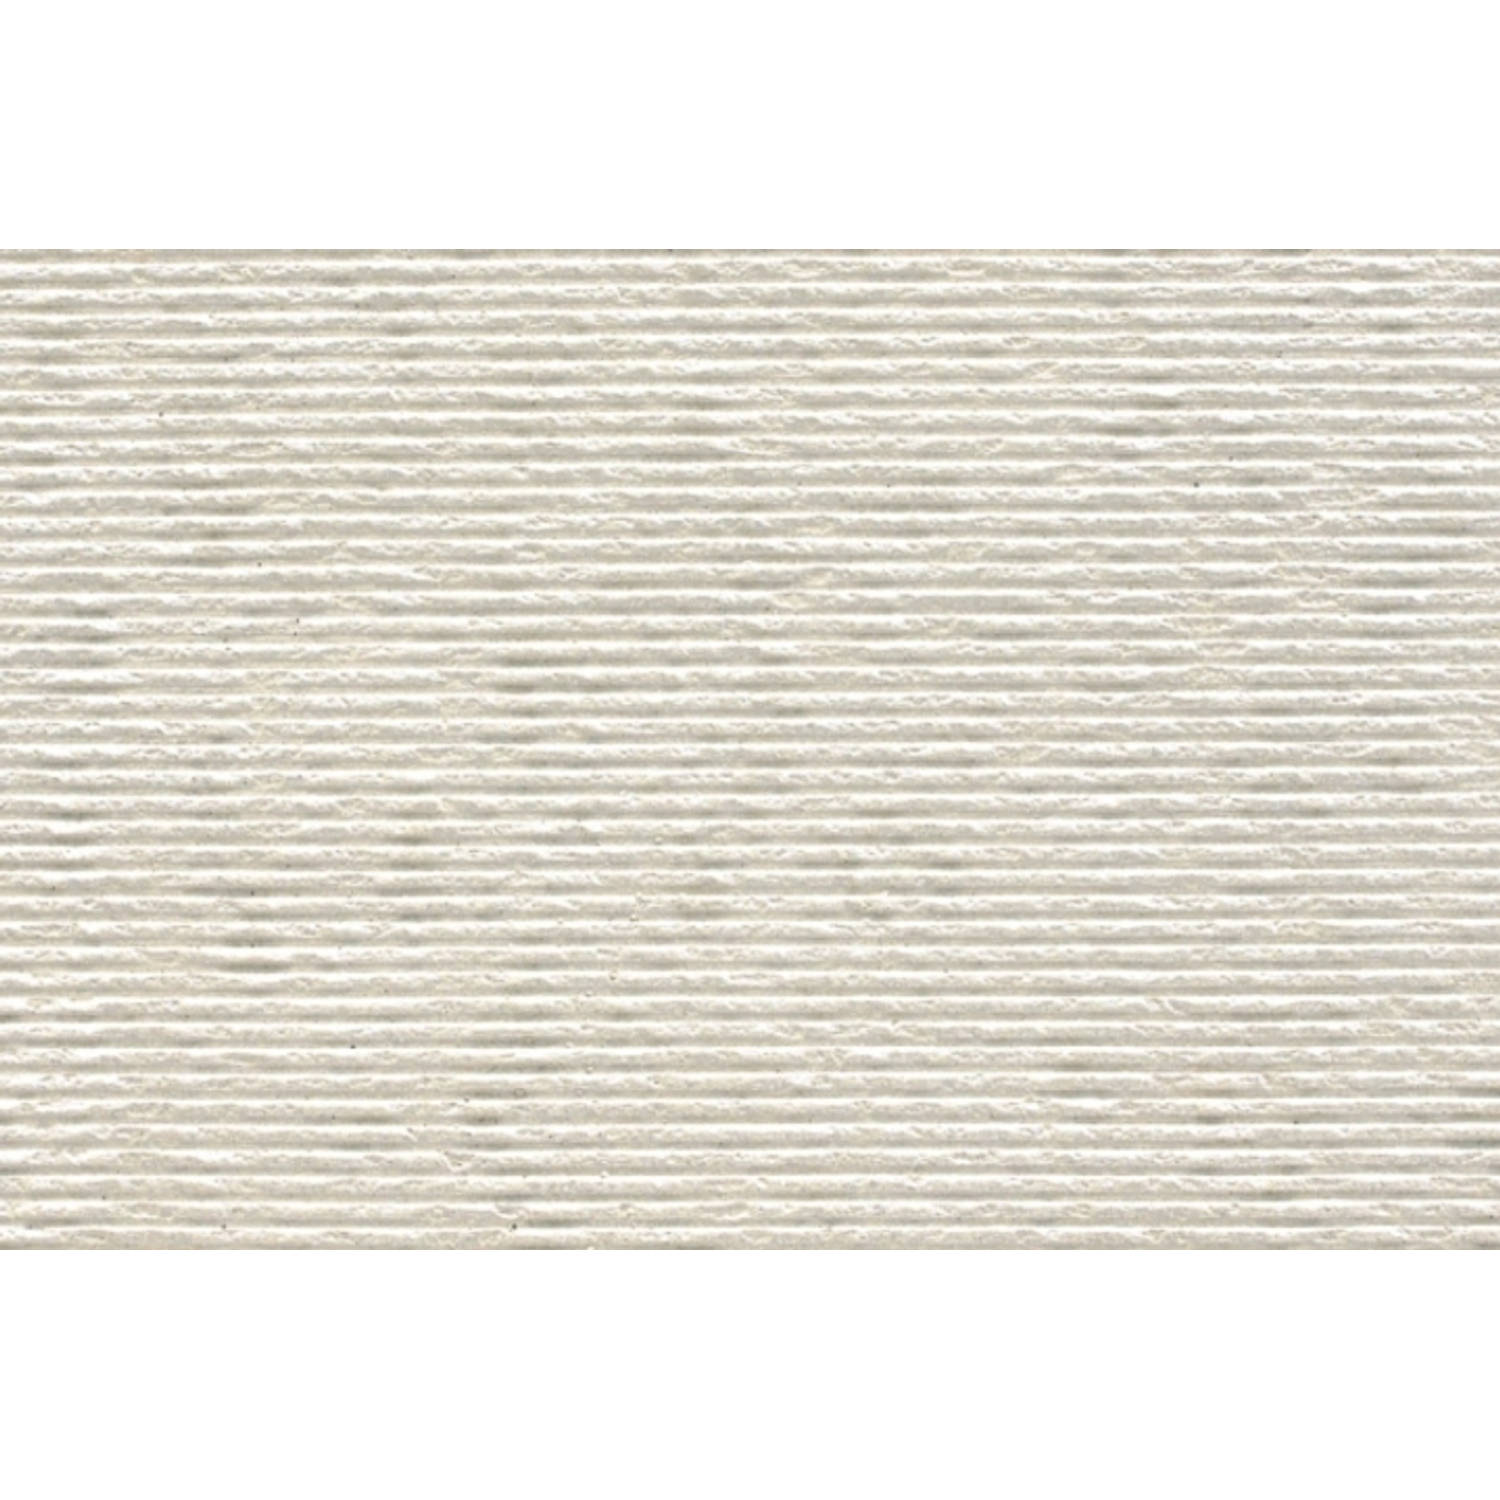 Phomi Cut Stone flexibele wandtegel - Wit 60 x 30 cm